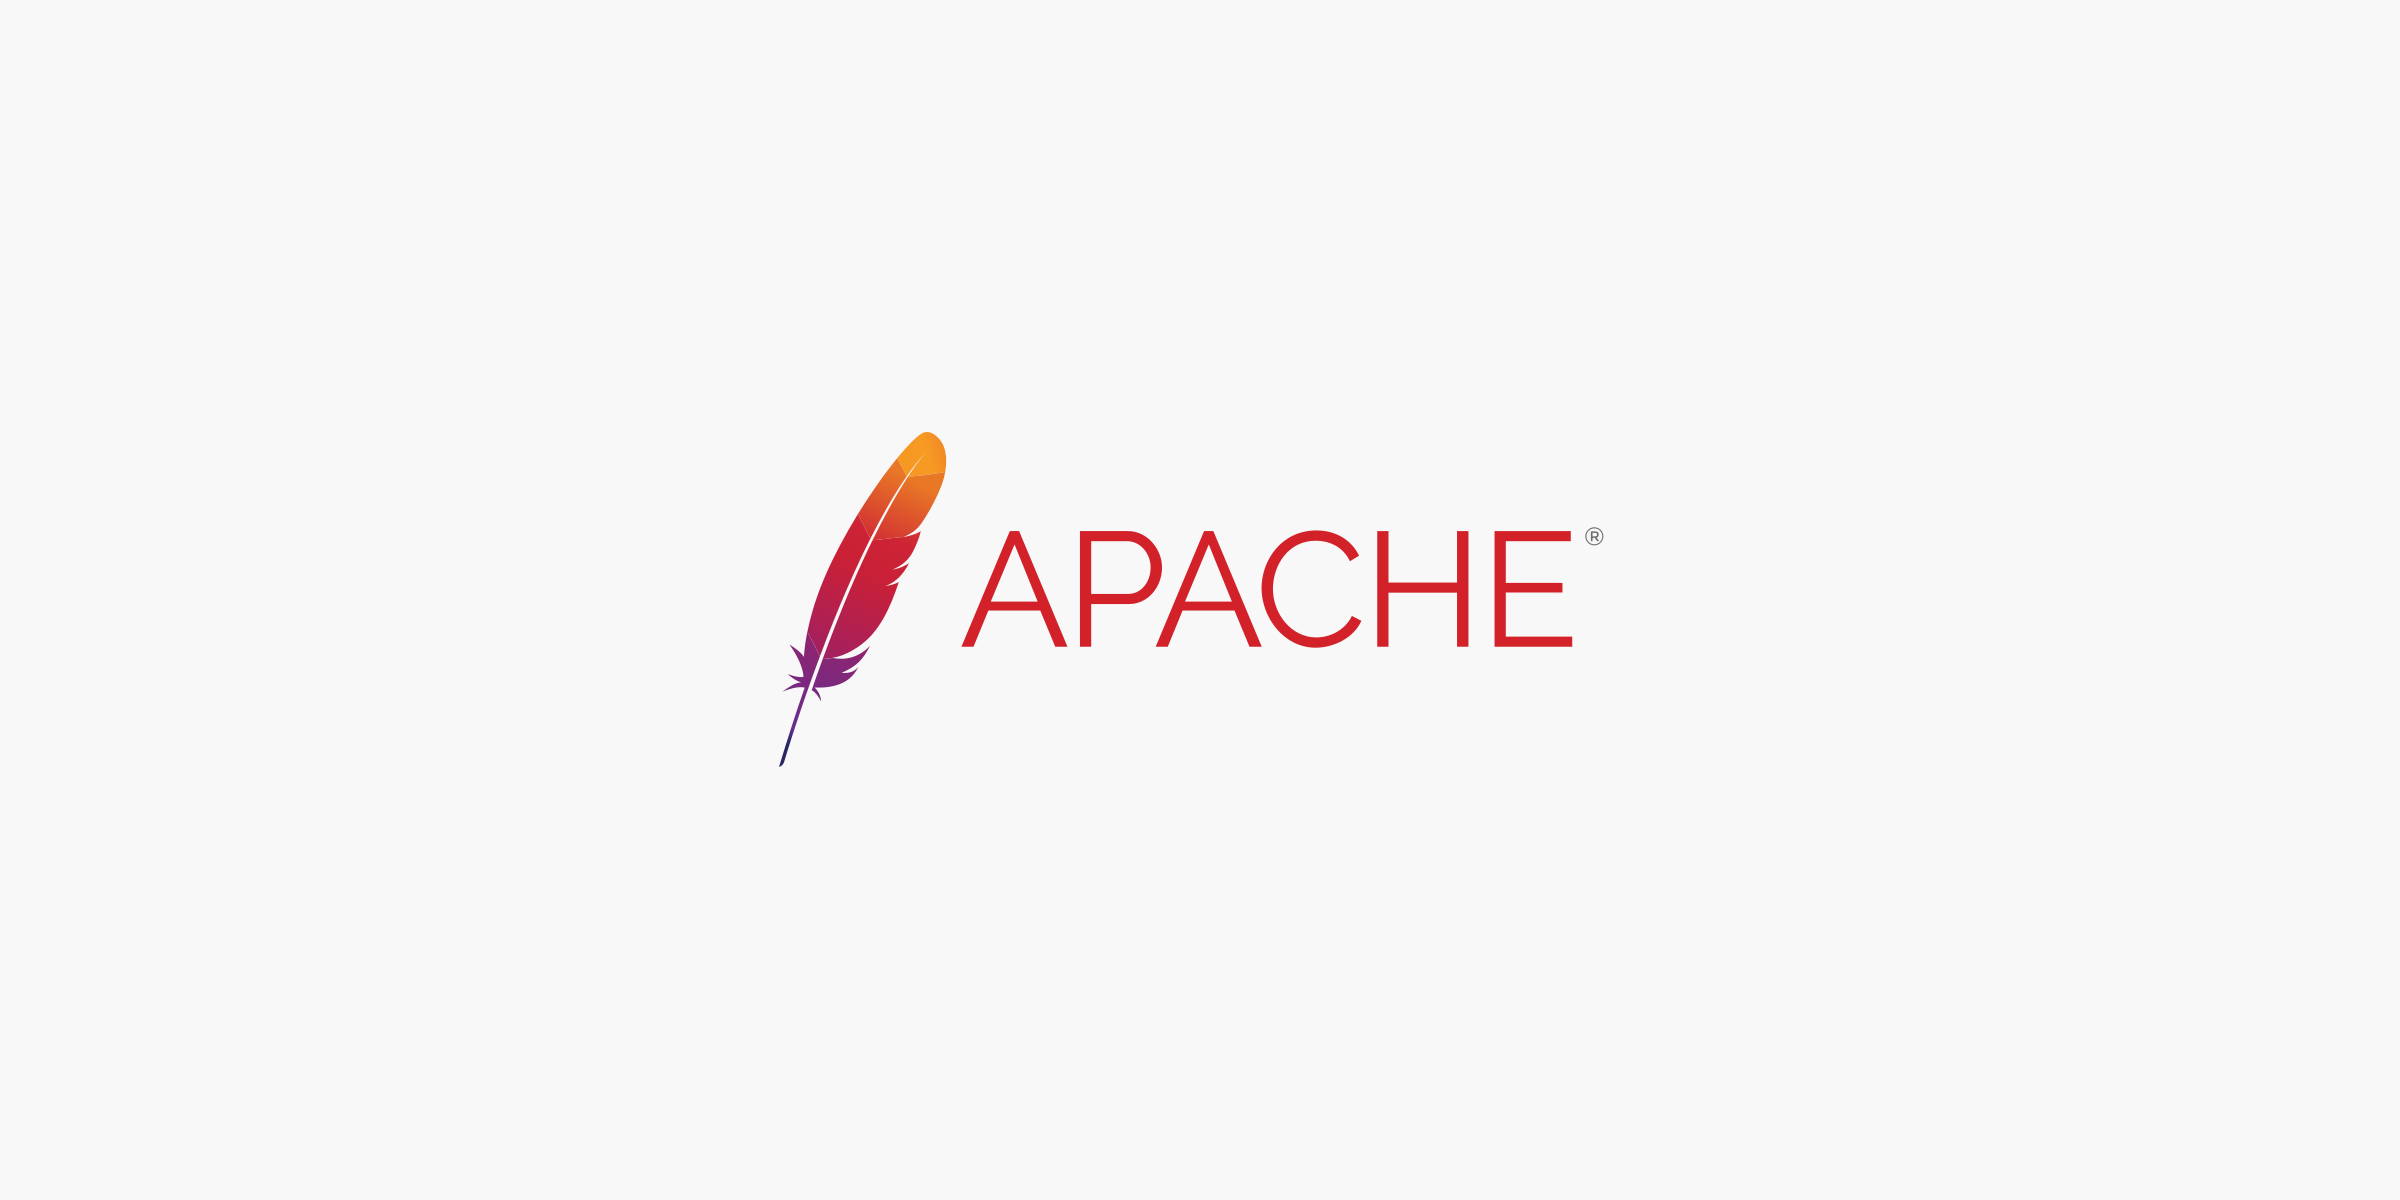 Apache host. Apache веб сервер. Apache логотип. Apache software Foundation. Apache веб сервер логотип.